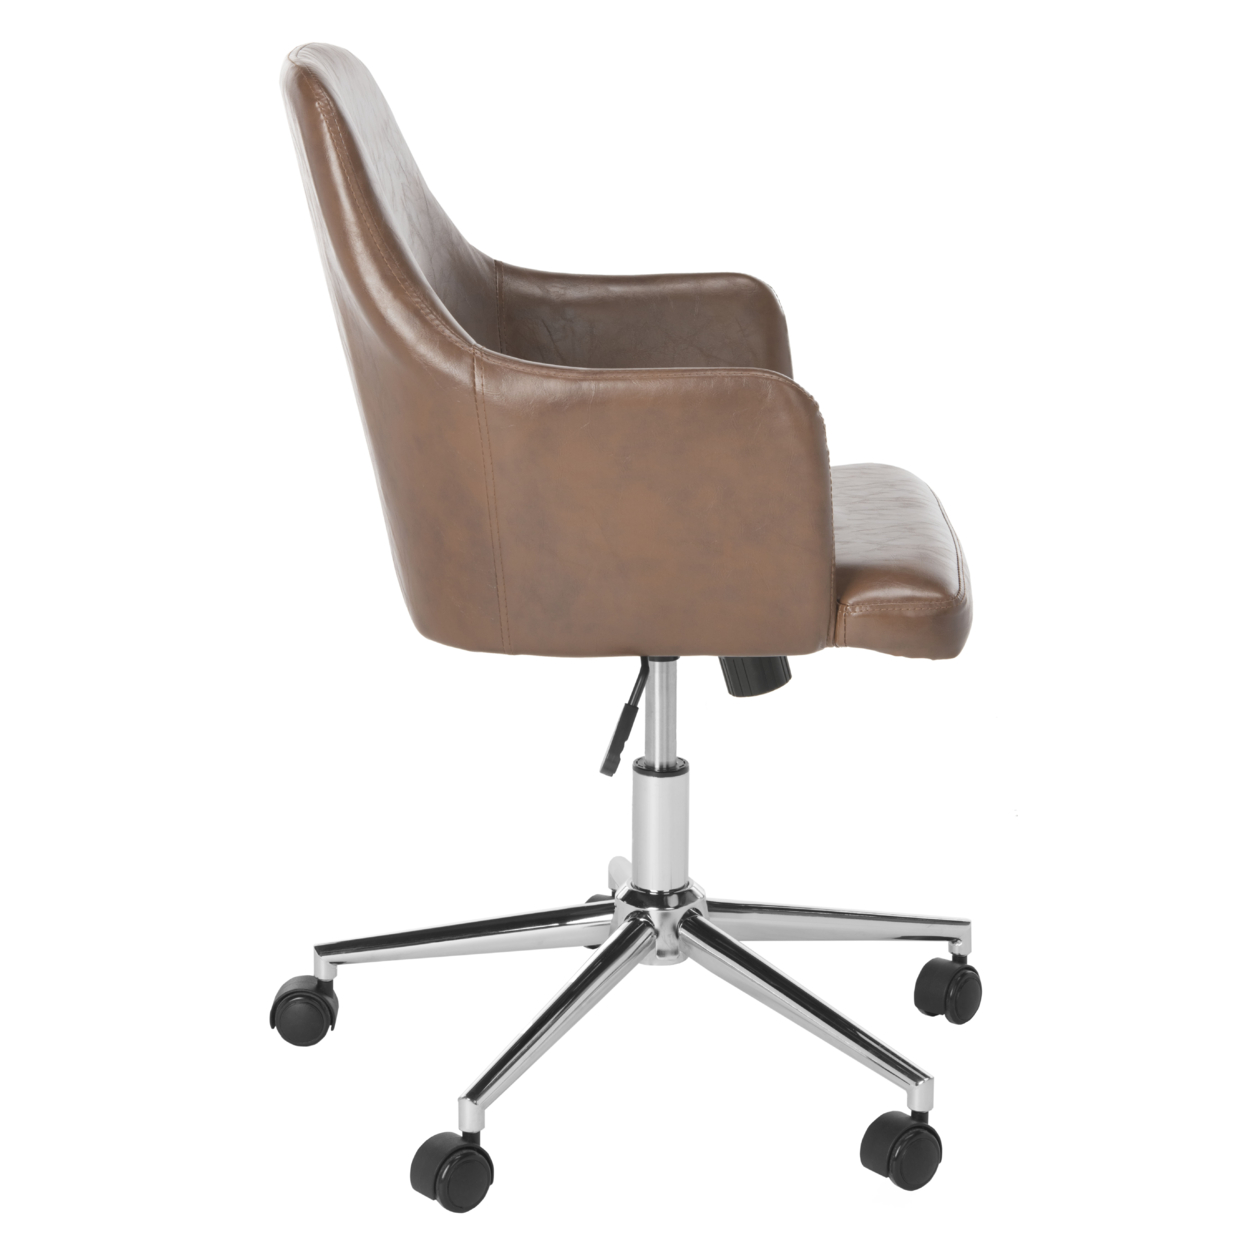 SAFAVIEH Cadence Swivel Office Chair Brown / Chrome